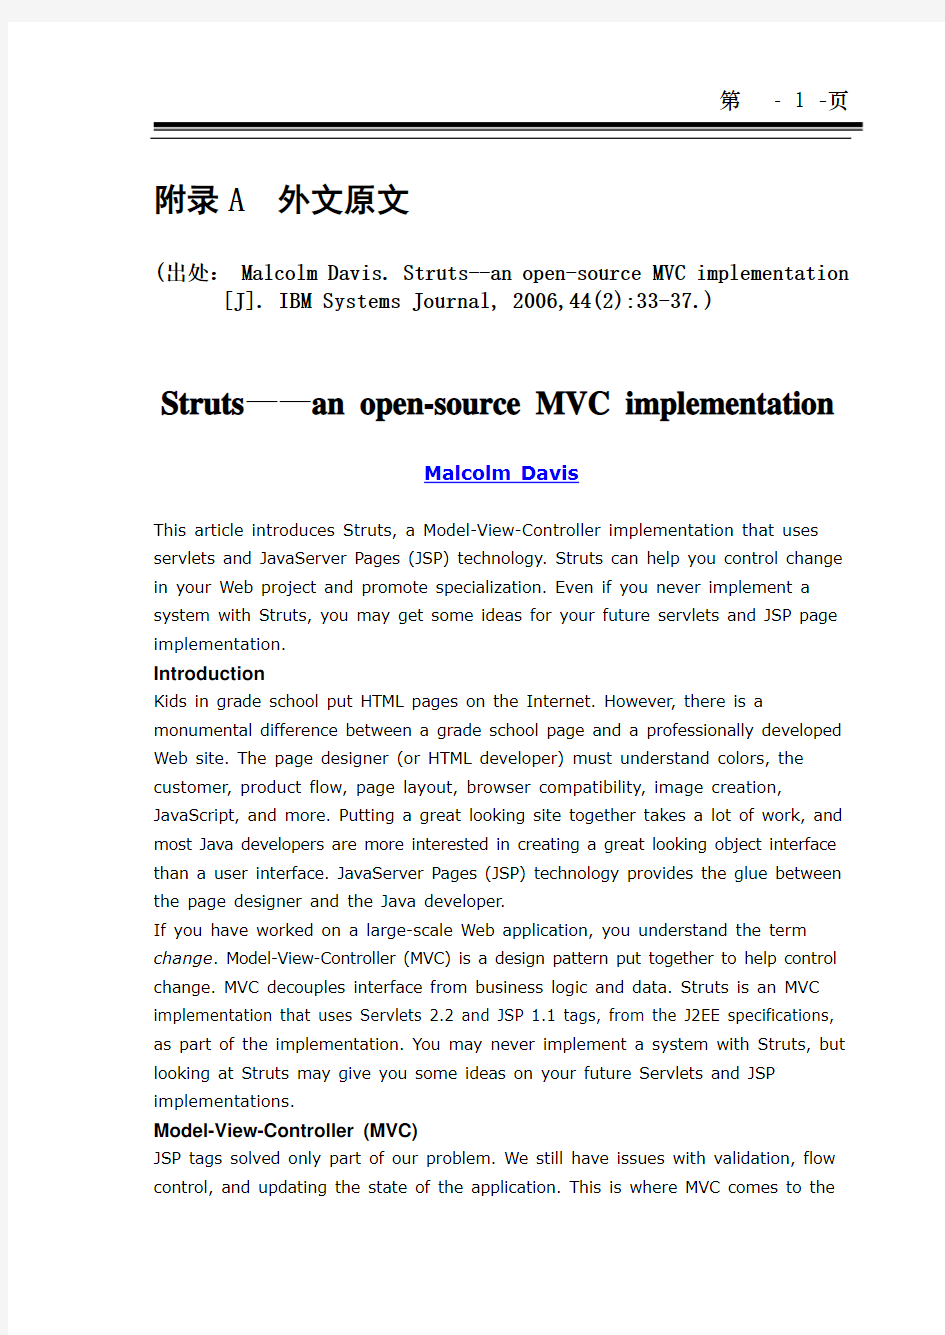 Struts——an open-source MVC implementation